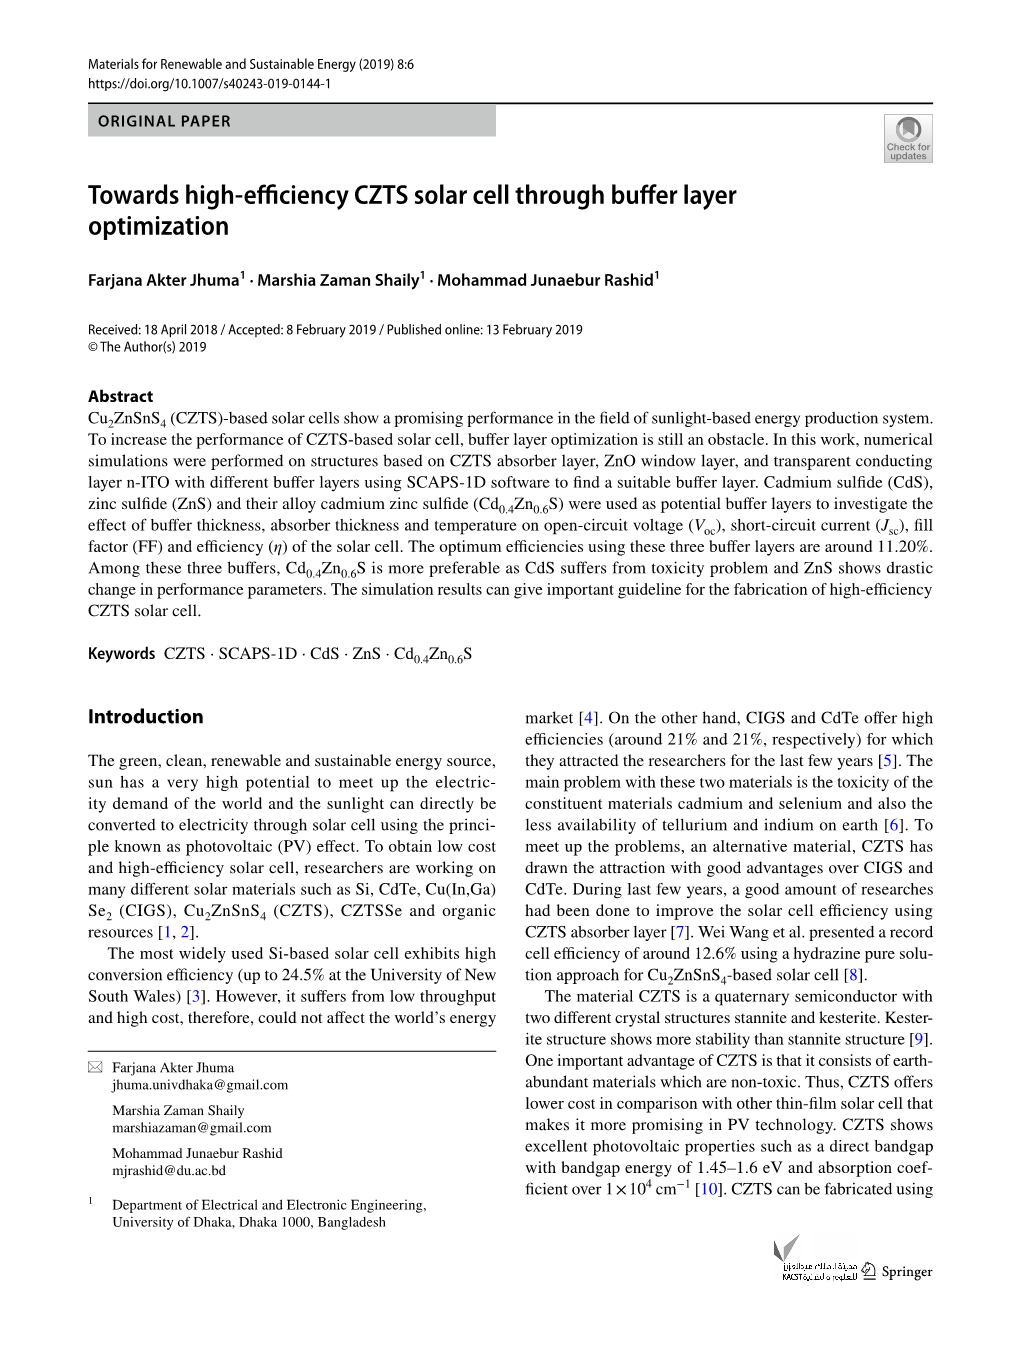 Towards High-Efficiency CZTS Solar Cell Through Buffer Layer Optimization